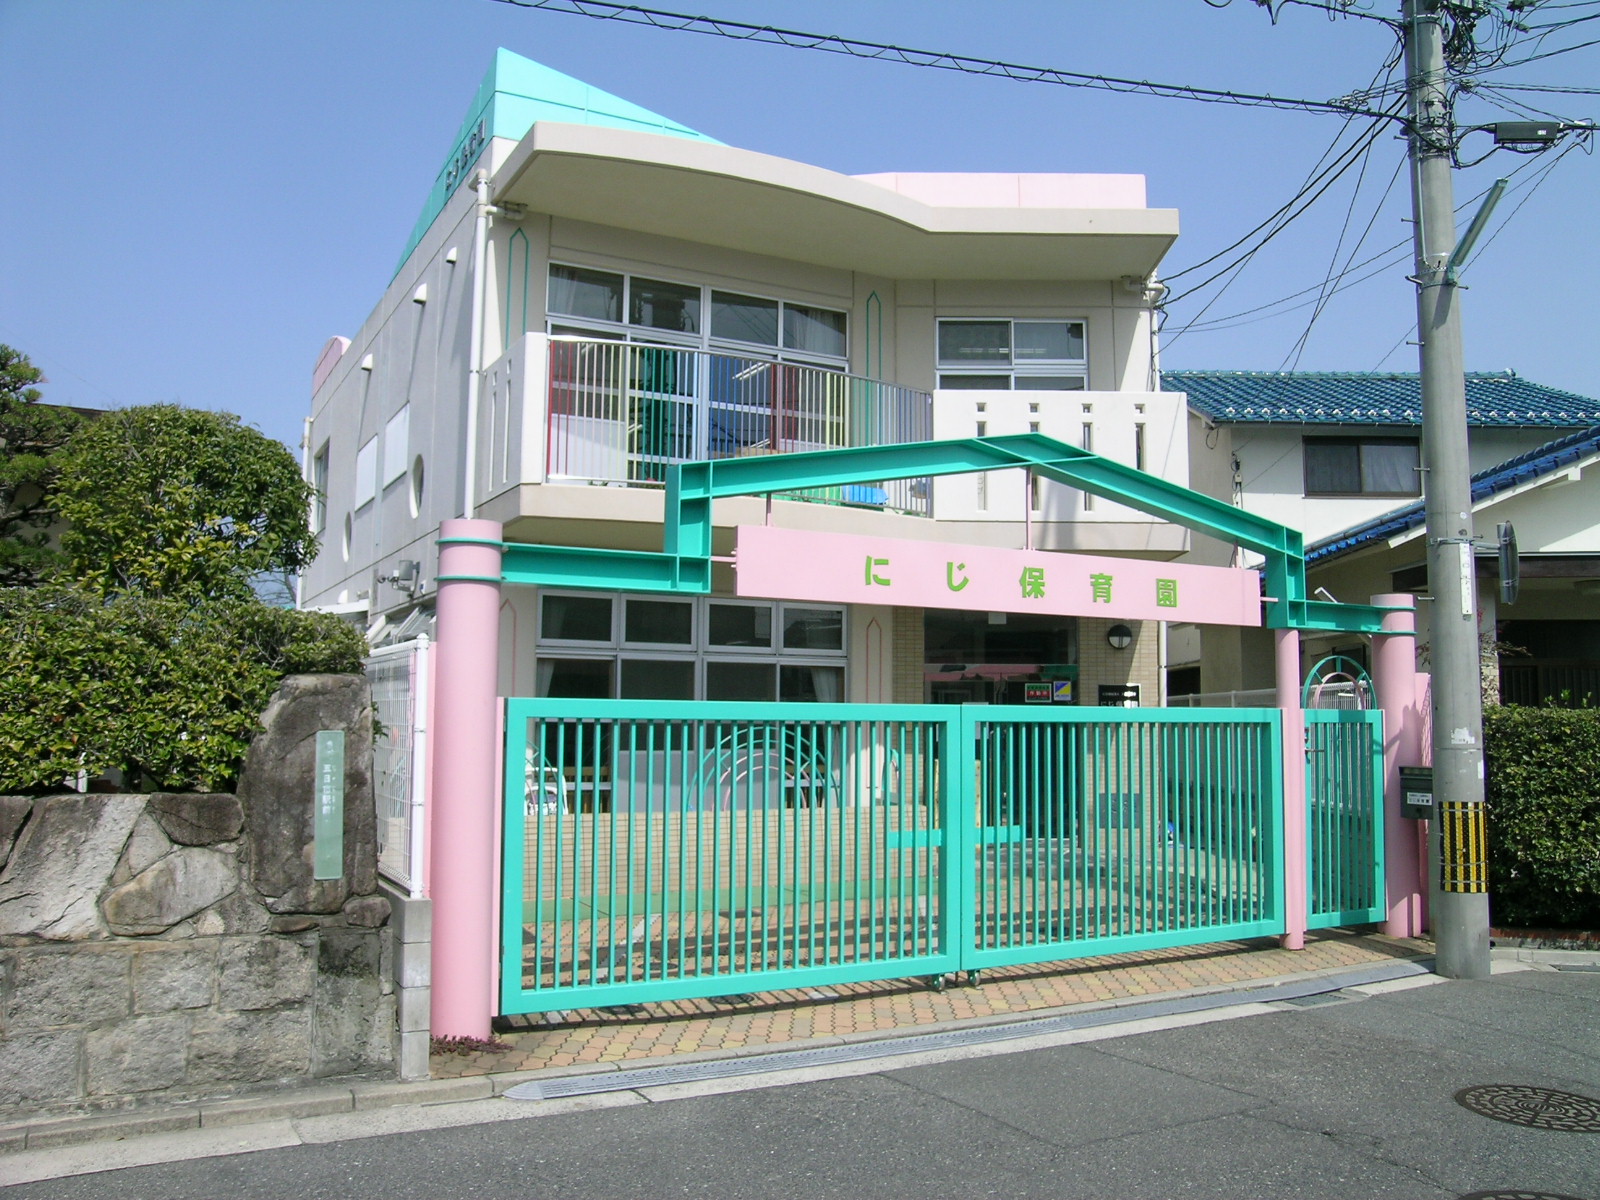 kindergarten ・ Nursery. Rainbow nursery school (kindergarten ・ 402m to the nursery)